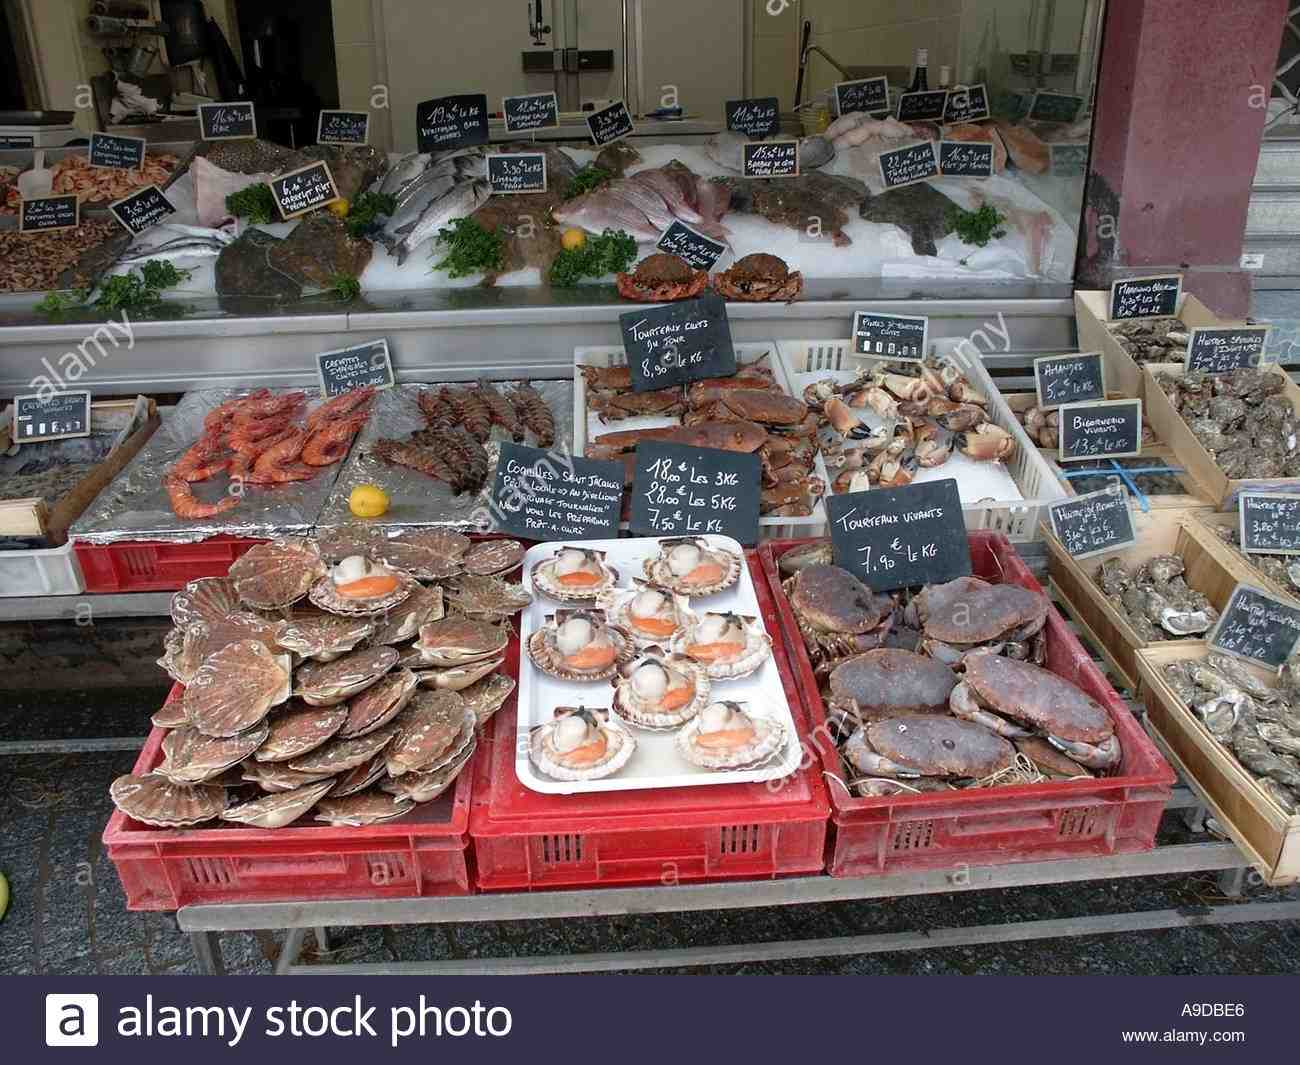 Où manger un plat de fruits de mer à Deauville?